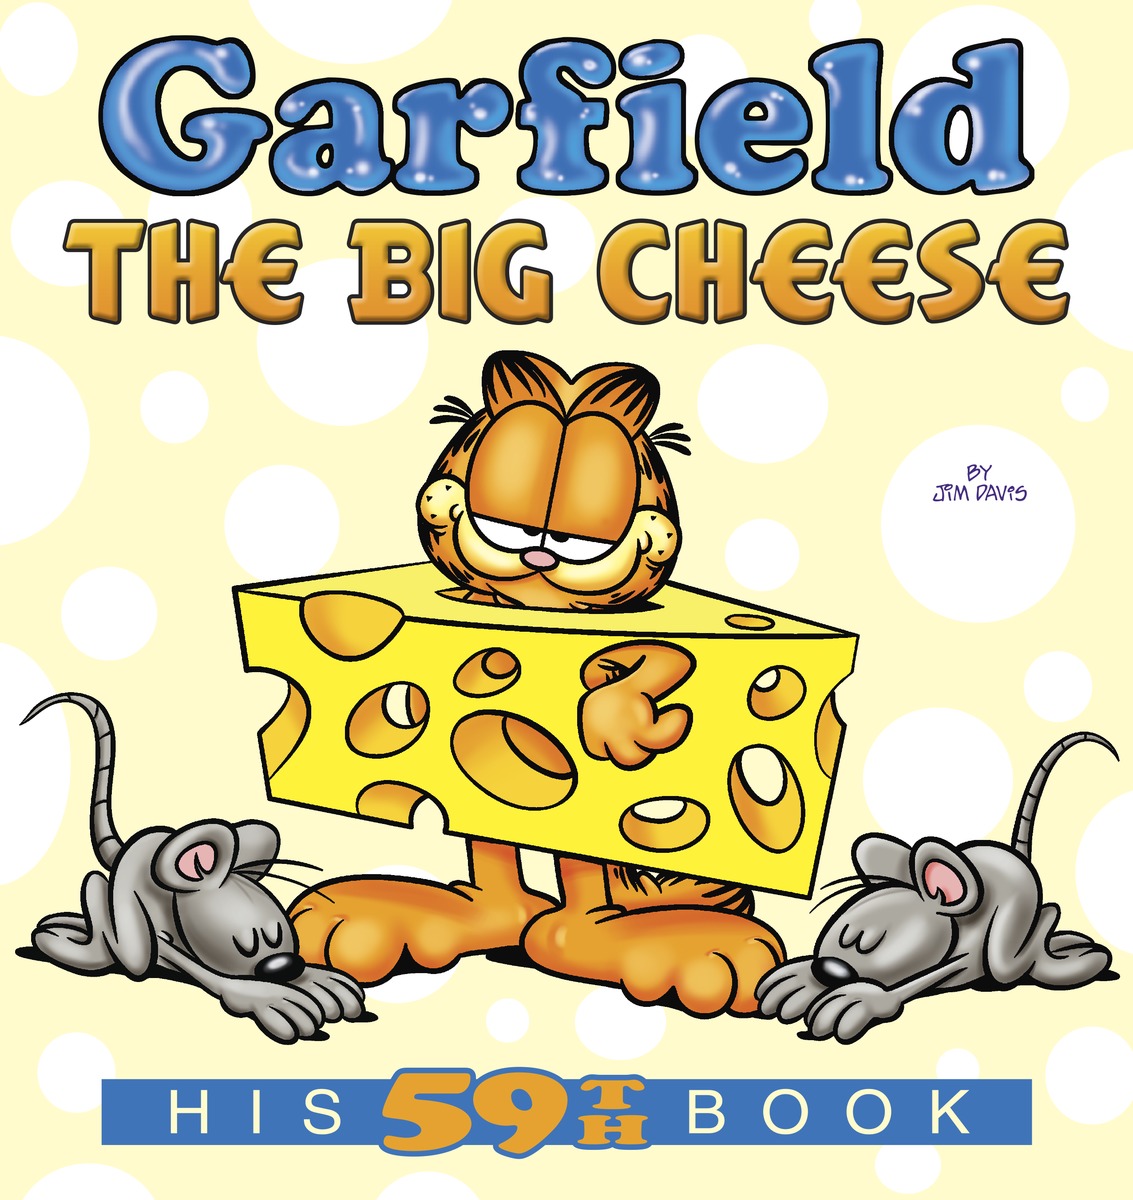 Garfield: The Big Cheese